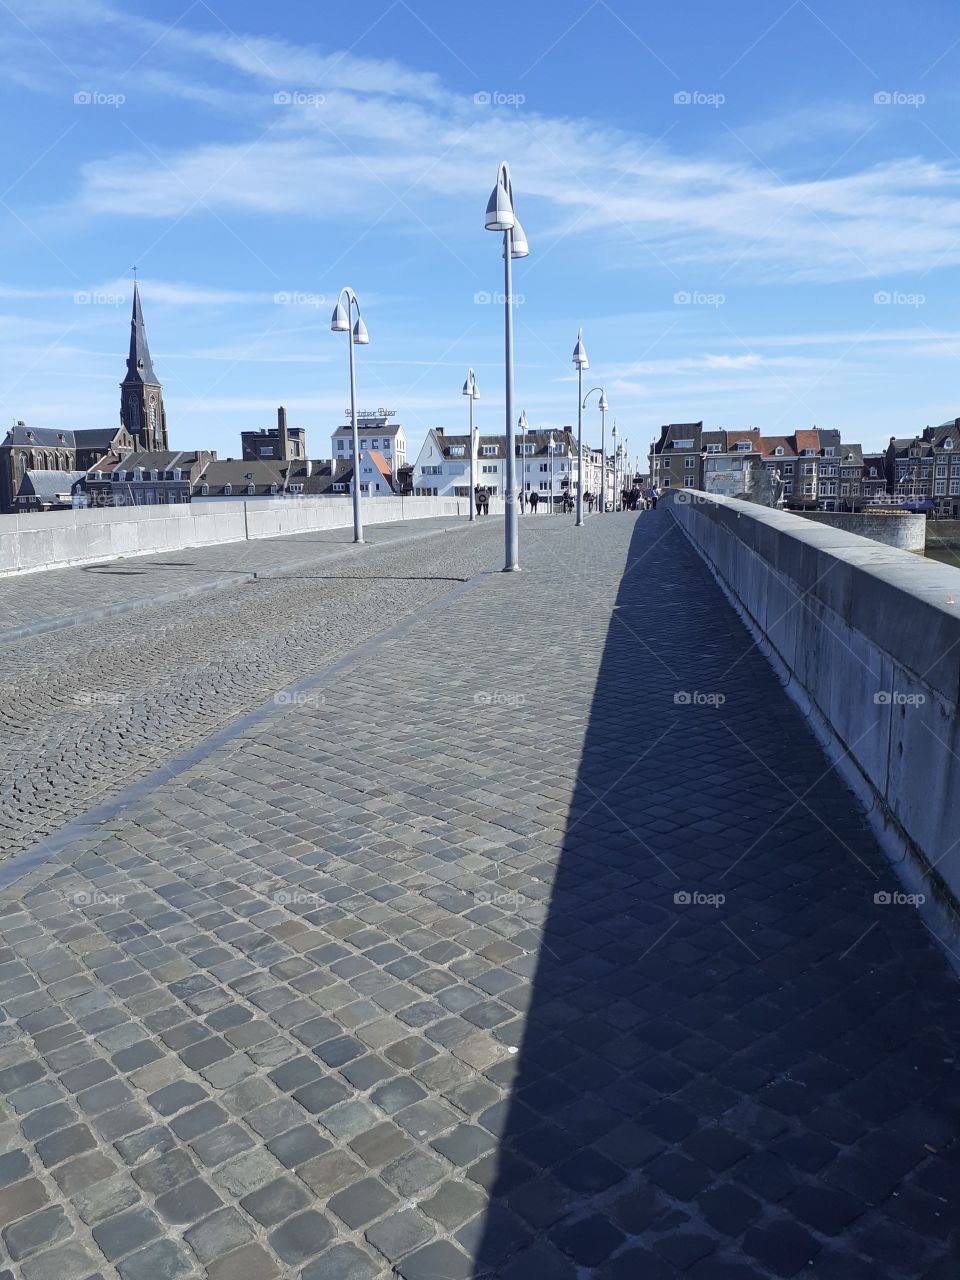 Maastricht popular walking bridge empty in Corona times